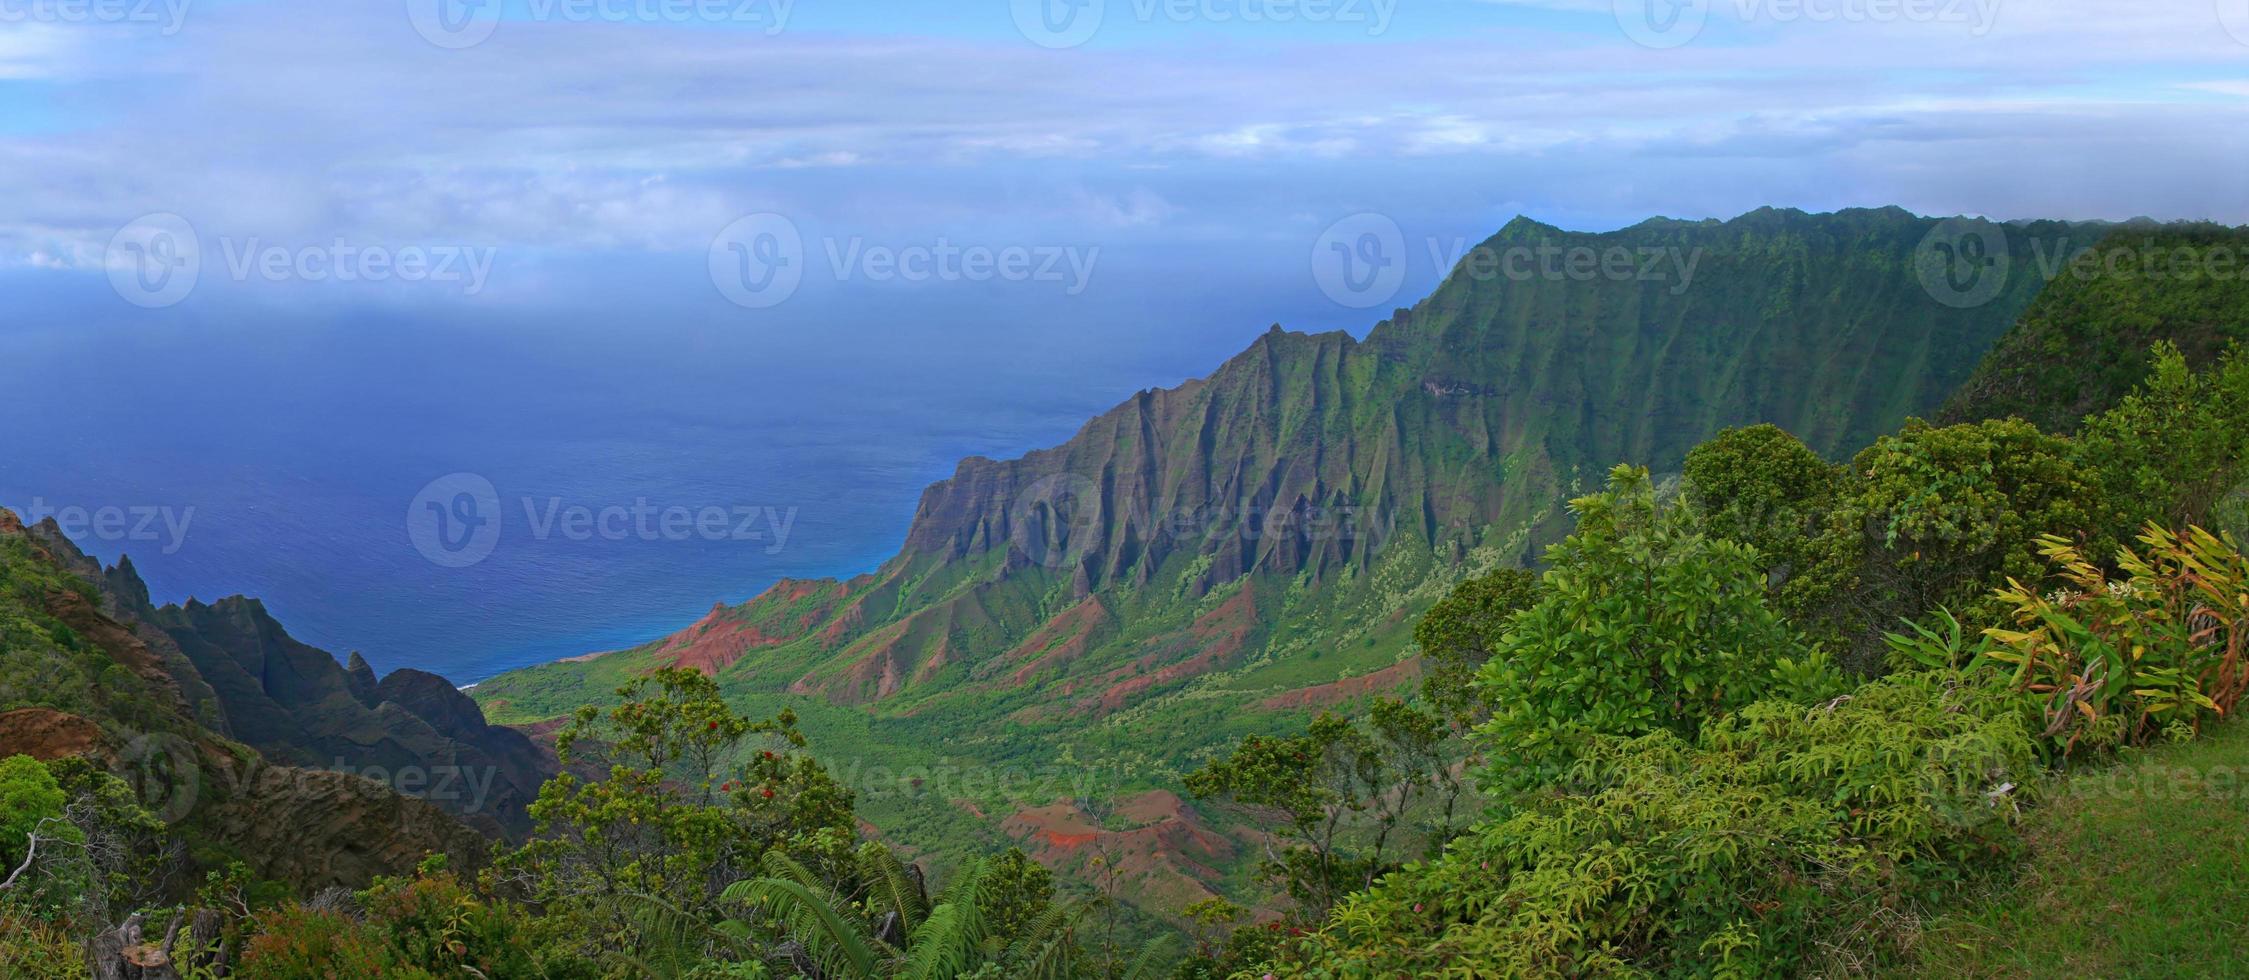 montañas de kauai hawaii foto